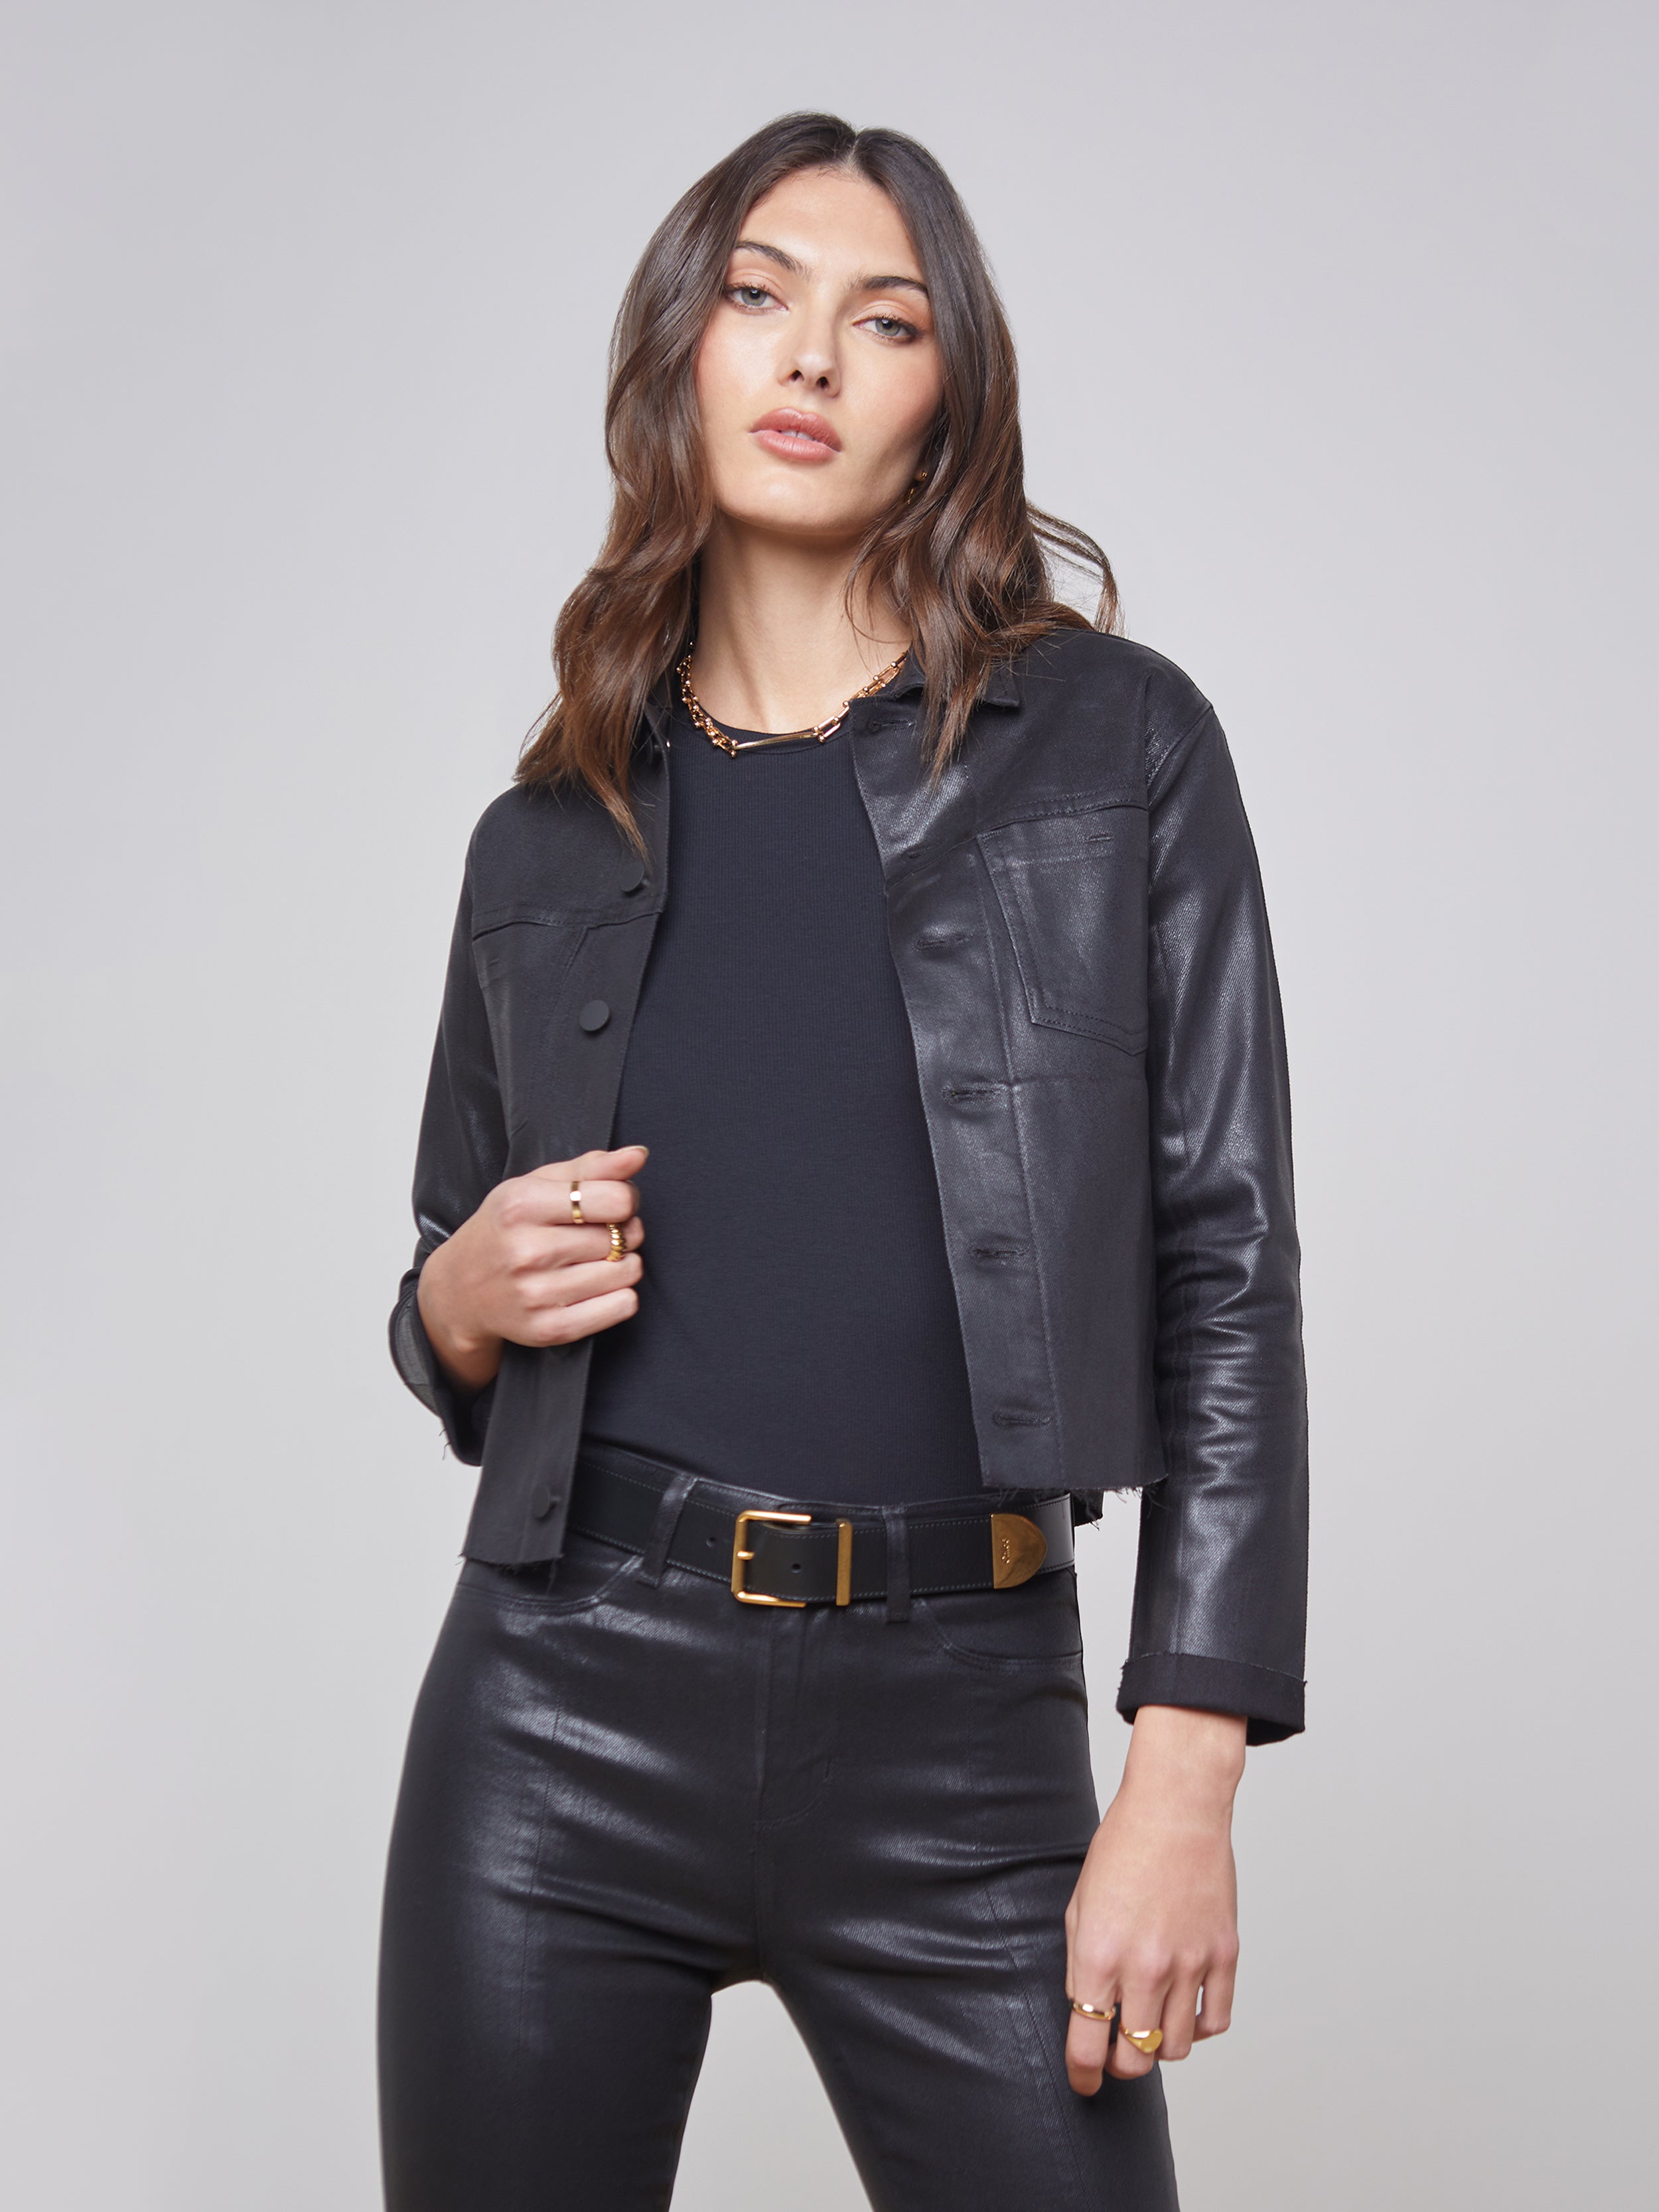 CHANEL, Jackets & Coats, Chanel 22s Cc Logo Denim Jacket Gray Black Fr 38  P7259 V6416 Mb 103